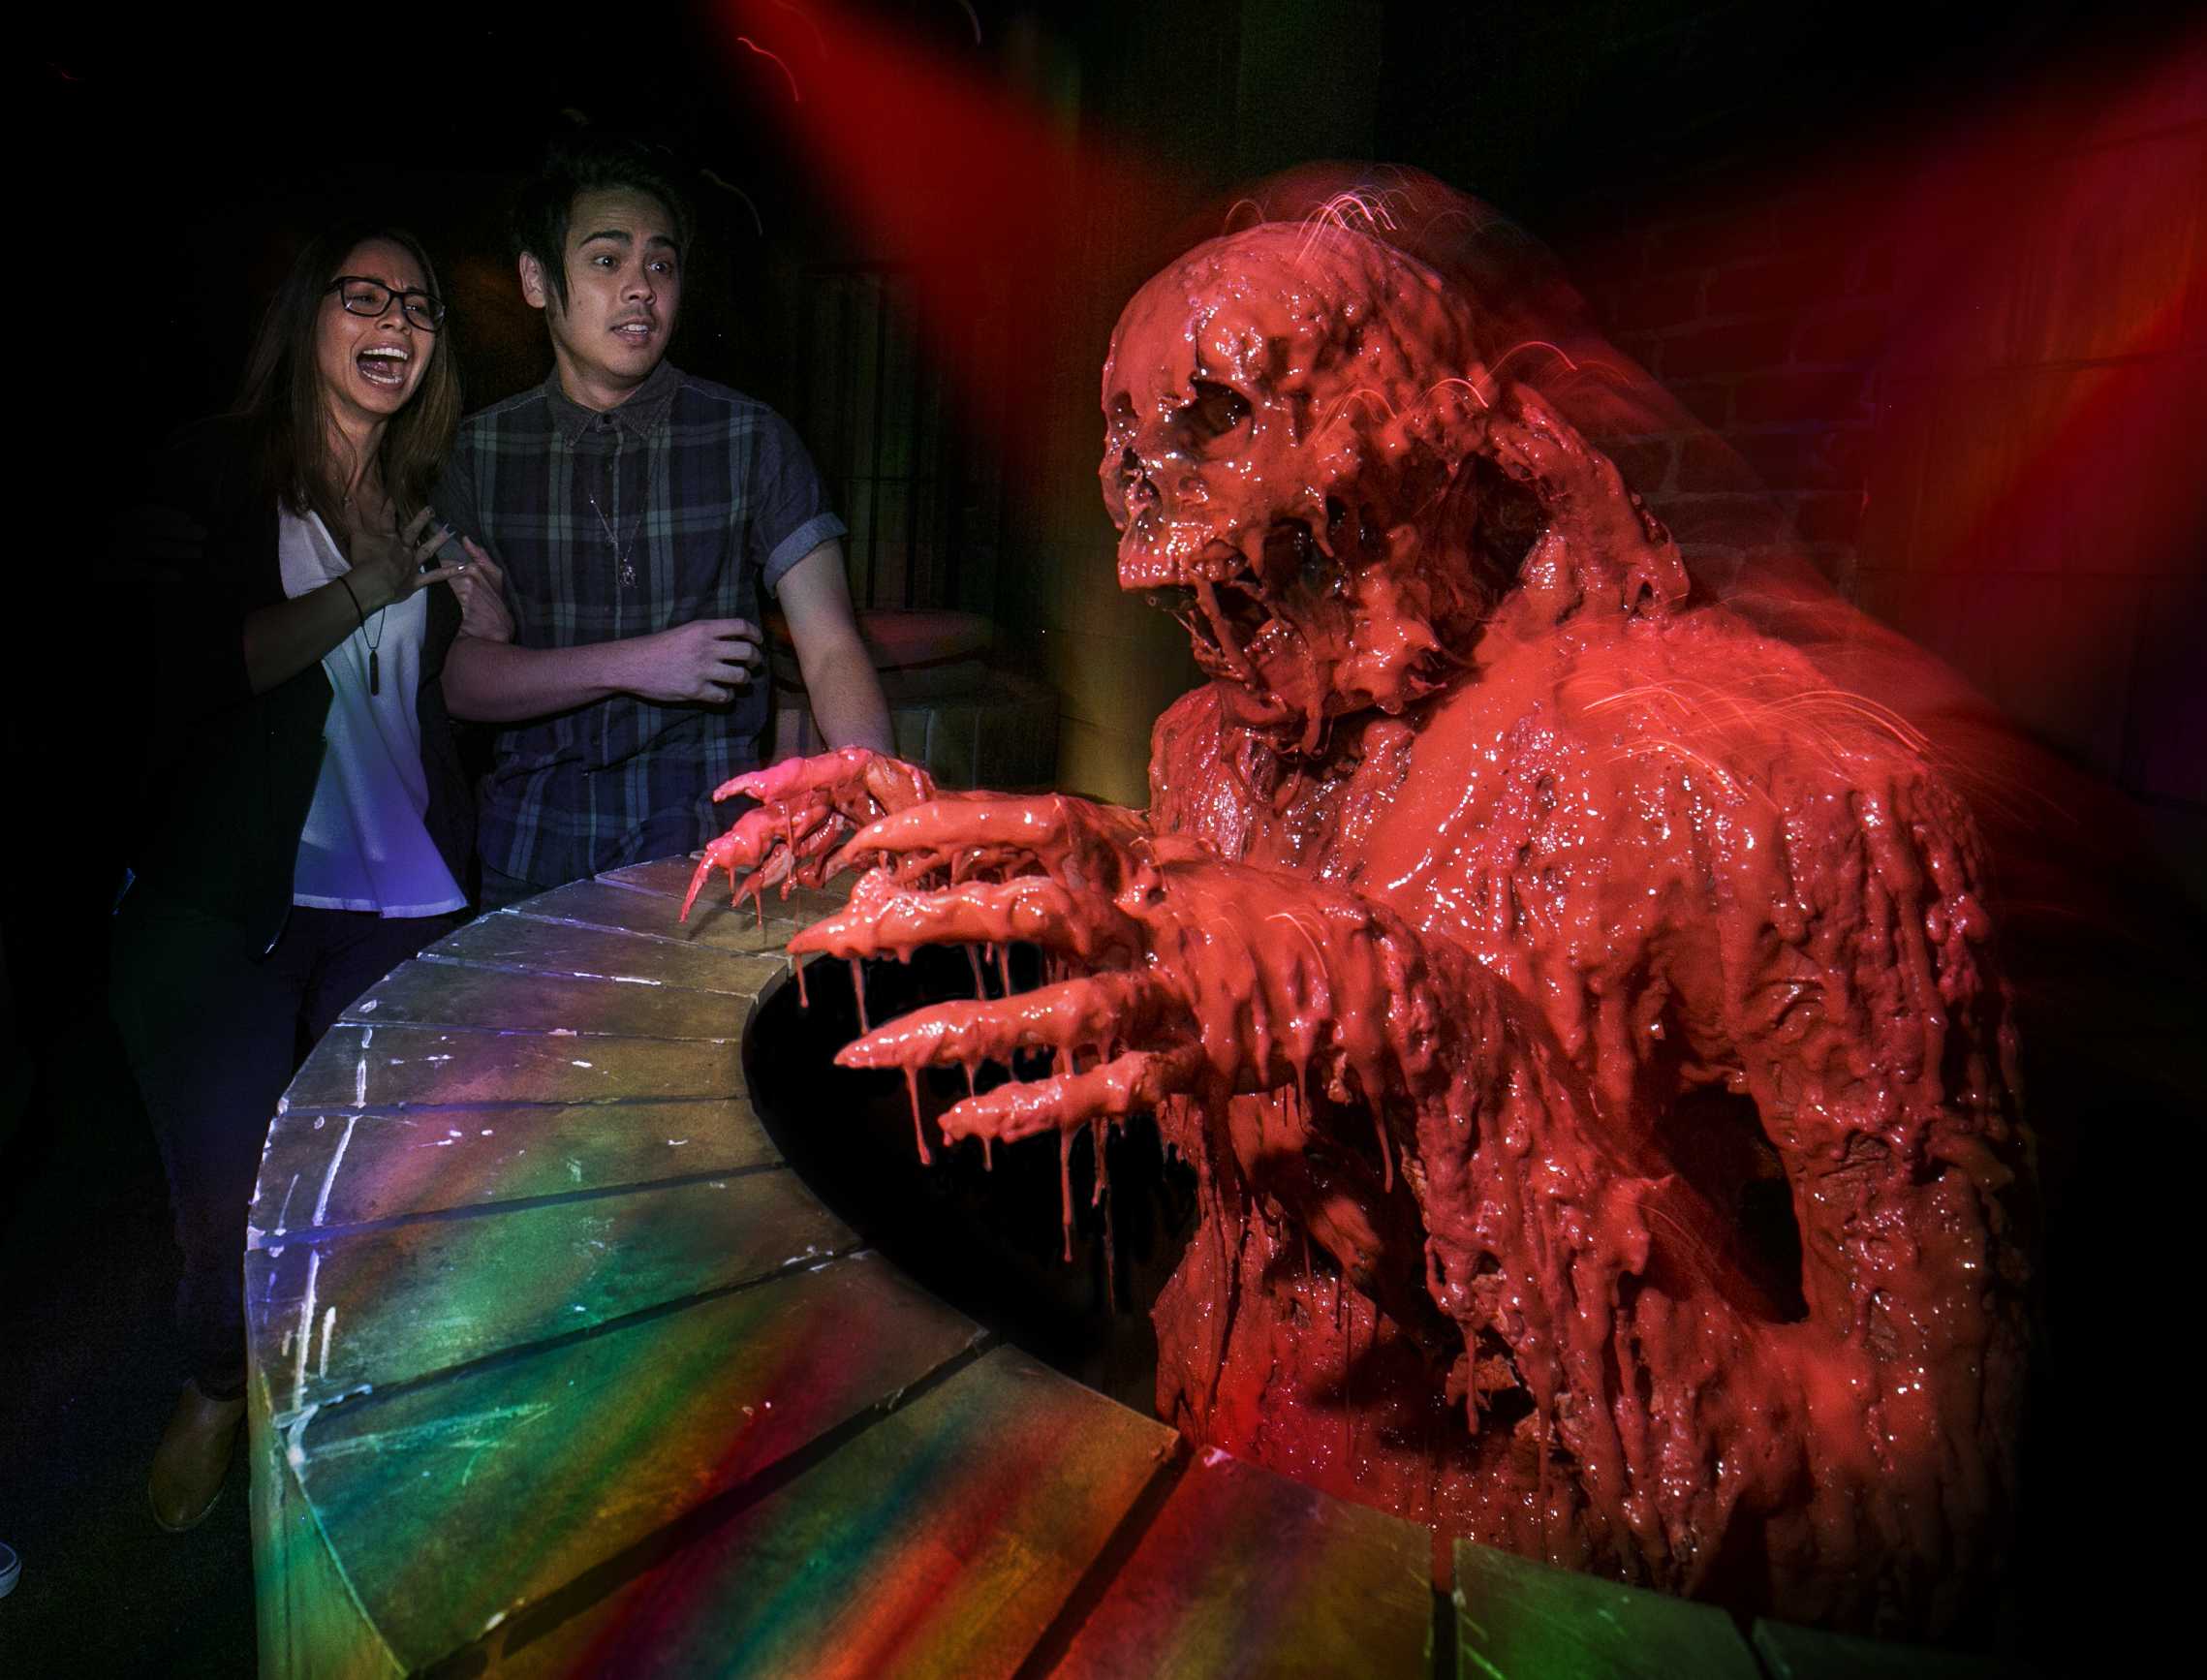 A new maze at Universal Studios Halloween Horror Nights inspired by Guillermo del Toros film Crimson Peak. (Photo by David Sprague / Universal Studio)